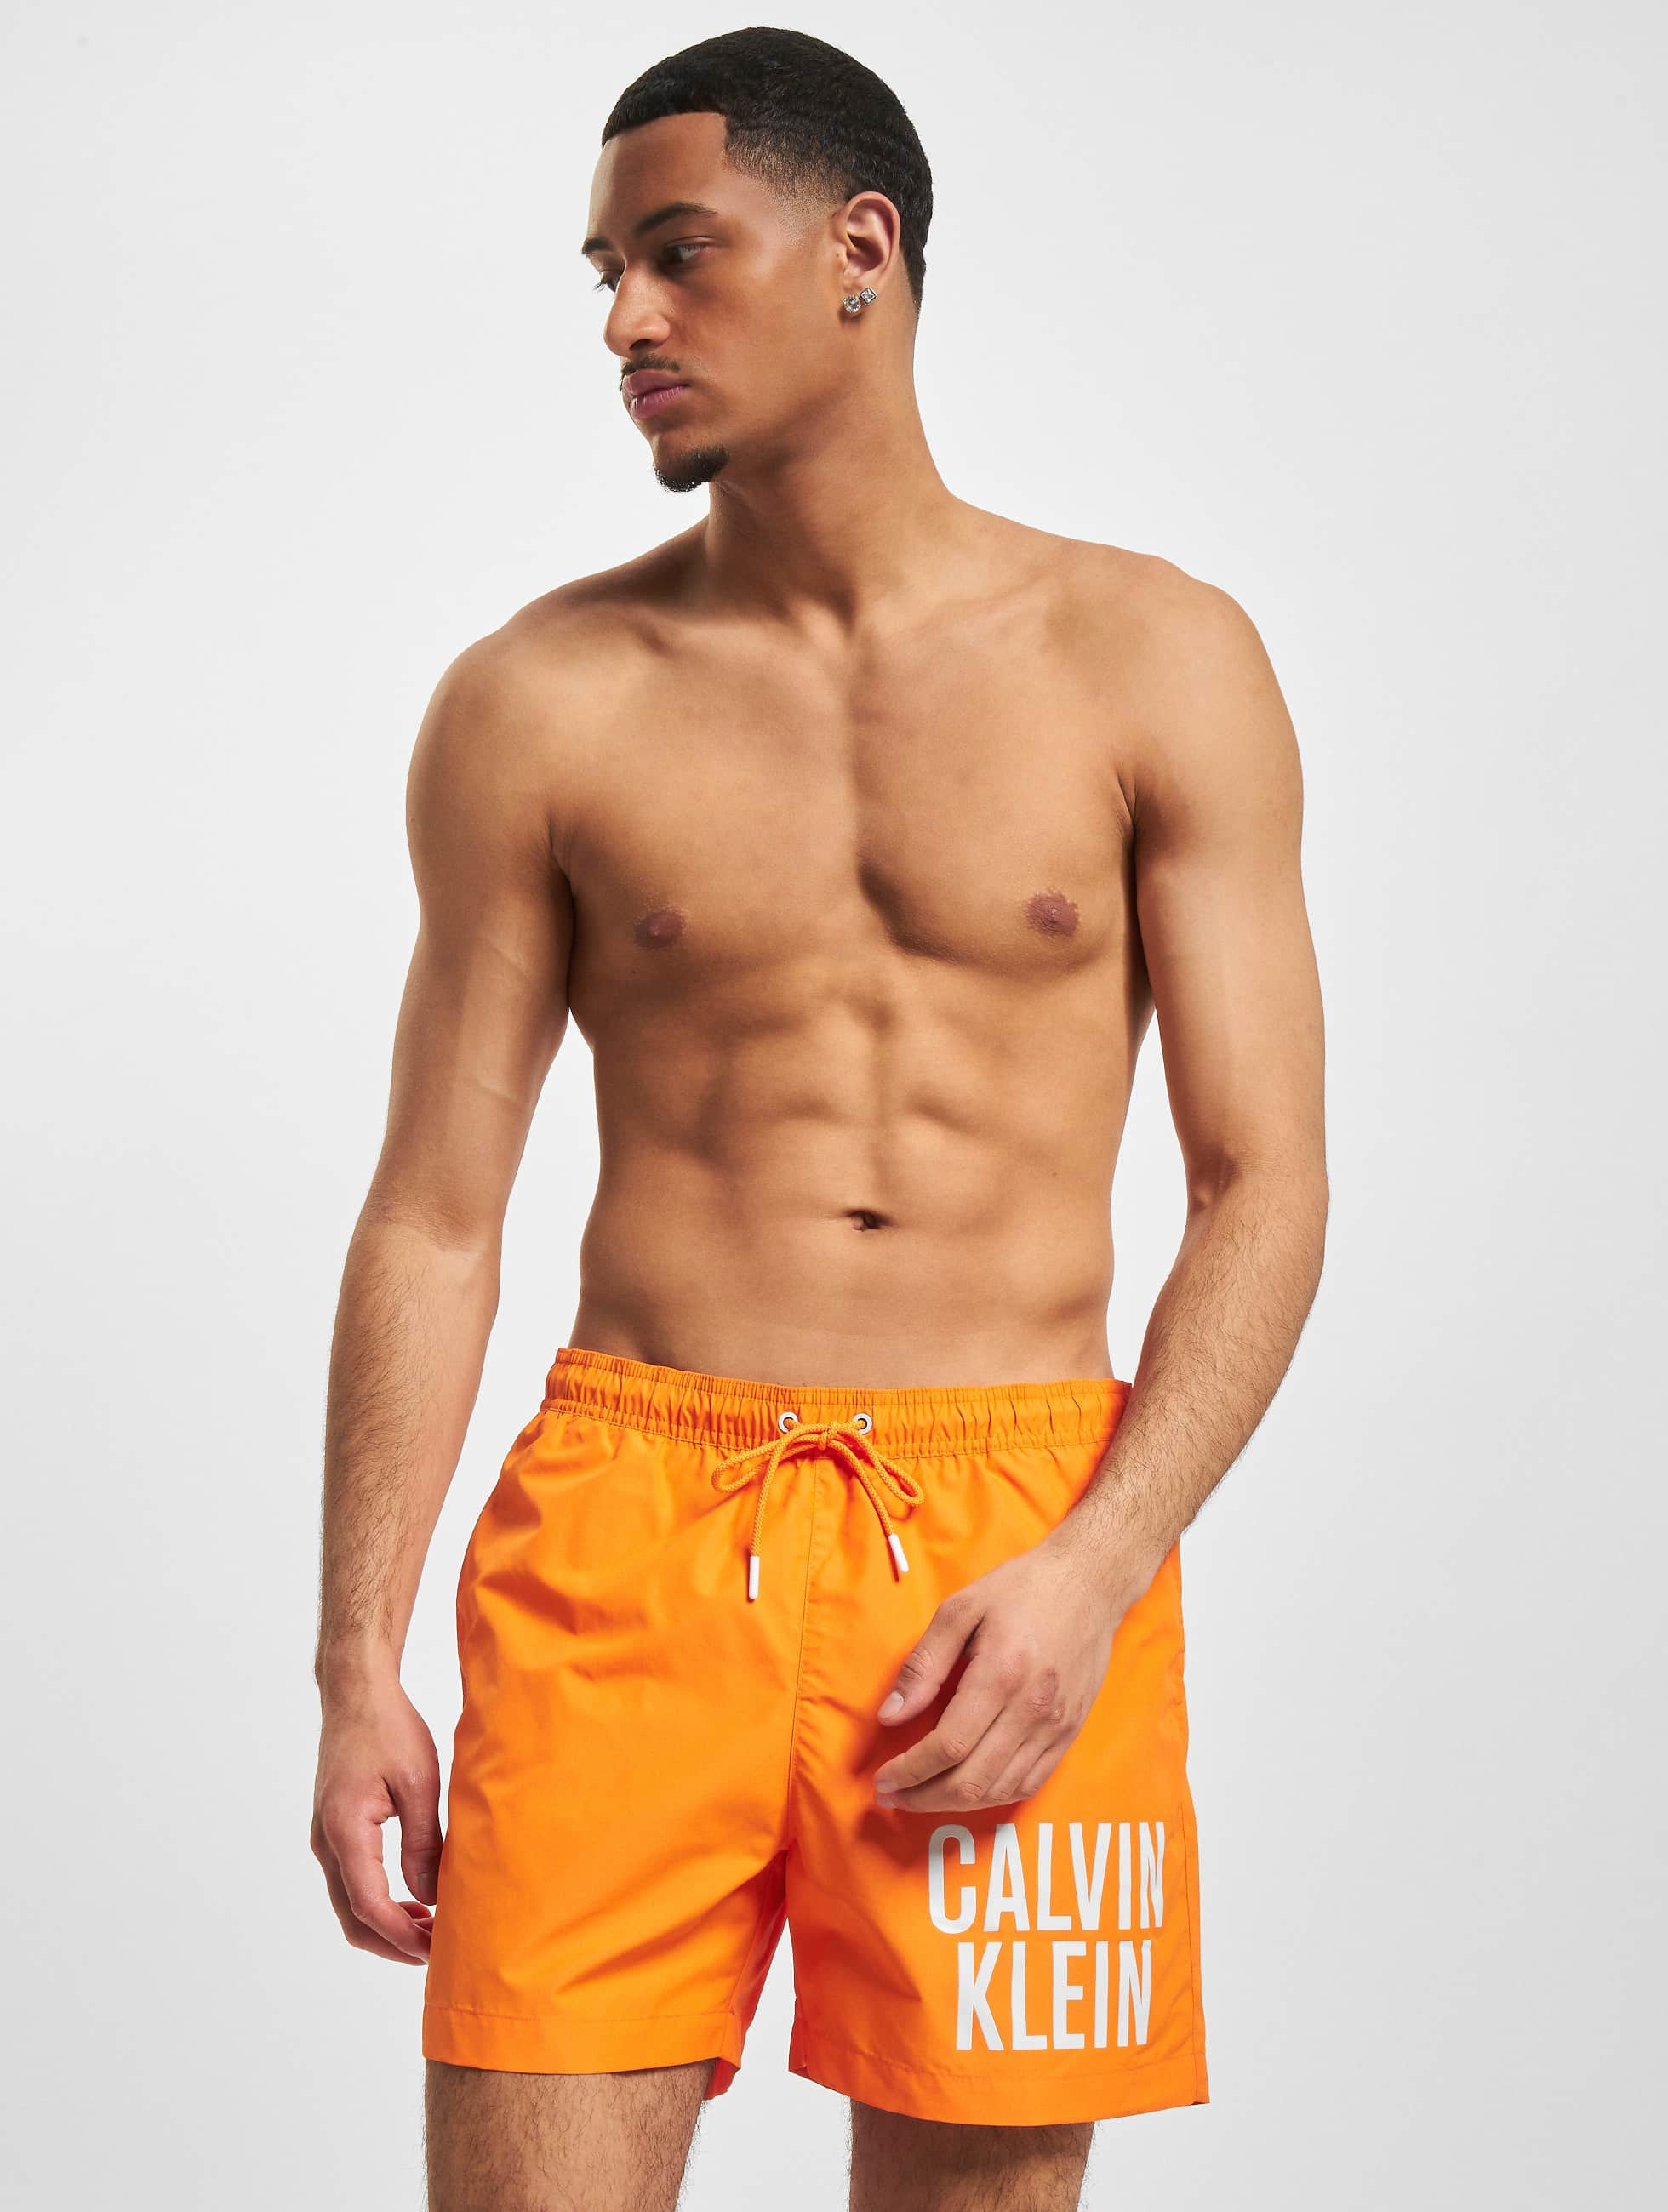 Pittig Korea Tekstschrijver Calvin Klein Ondergoed / Badmode / Zwembroek Medium Drawstring in oranje  986556